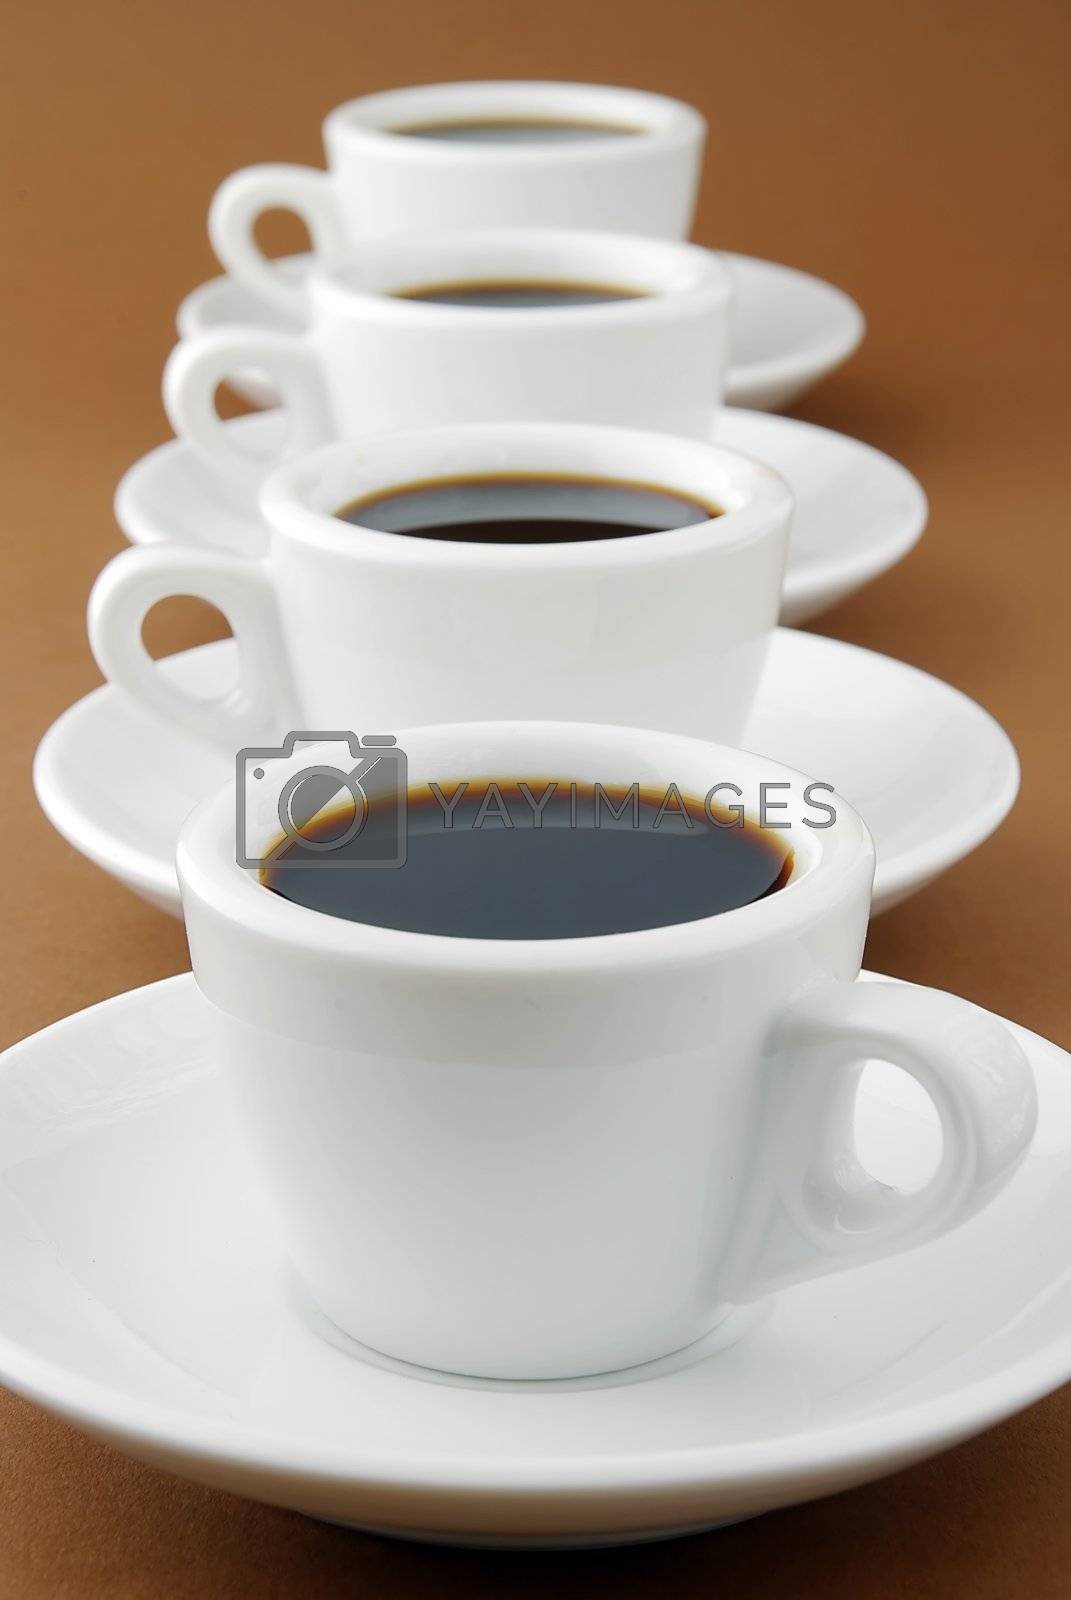 Royalty free image of espresso row by massman